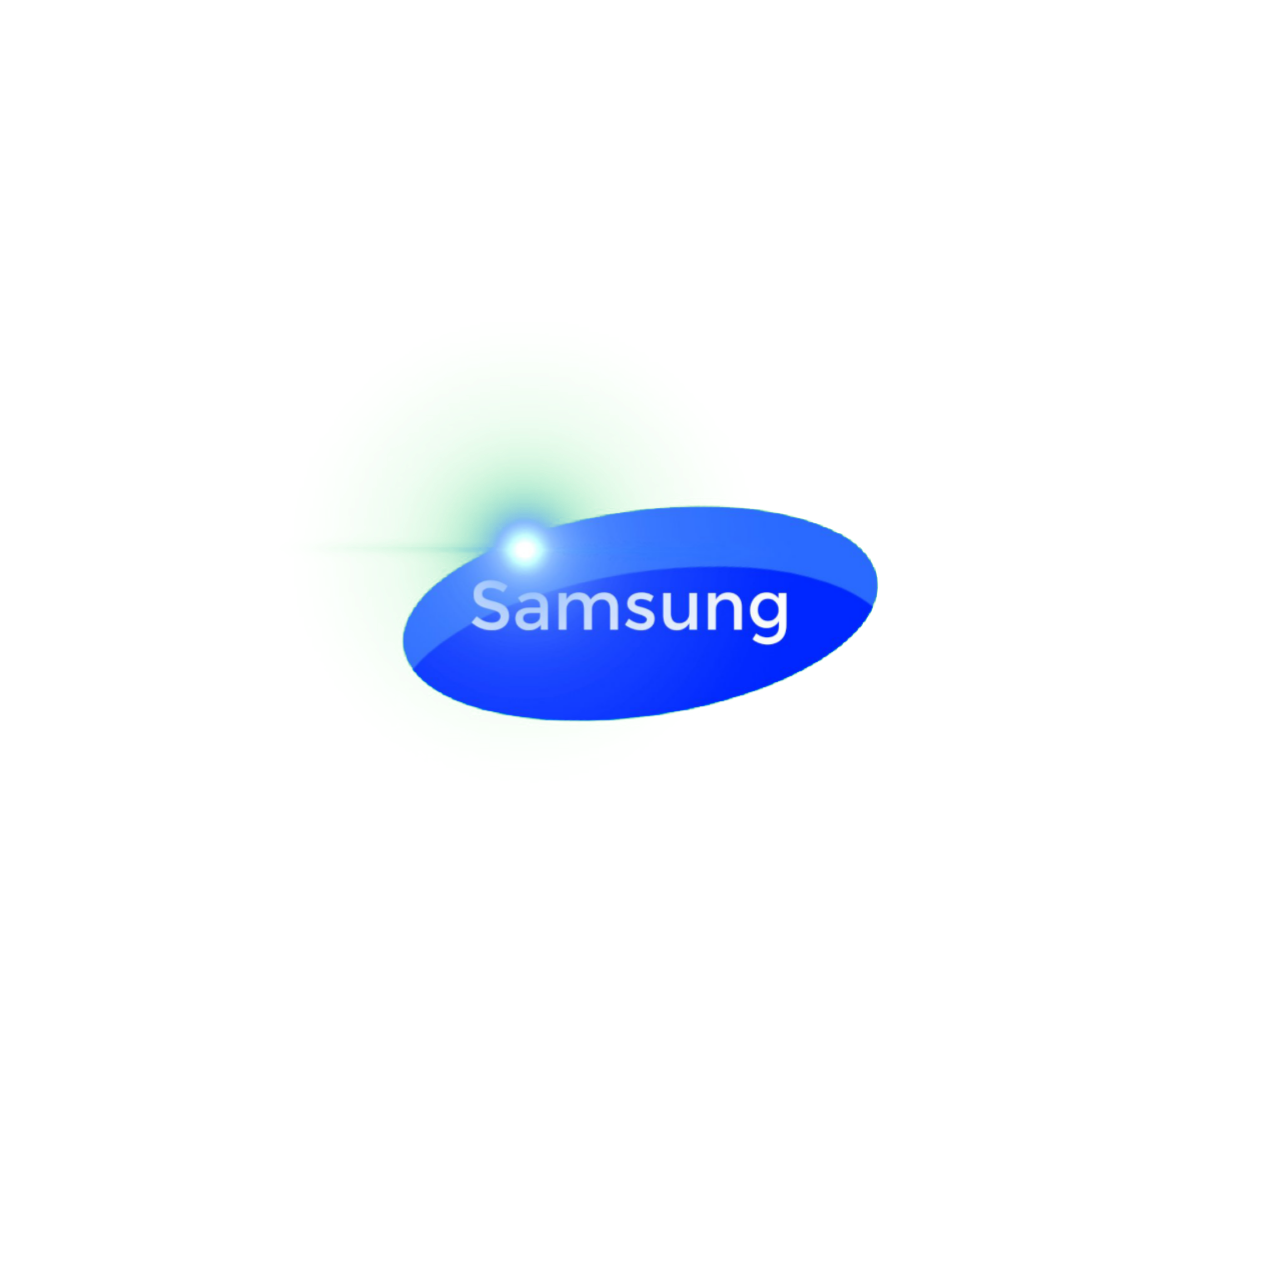 My Samsung logo concept (2022) by DonteBlue11 on DeviantArt